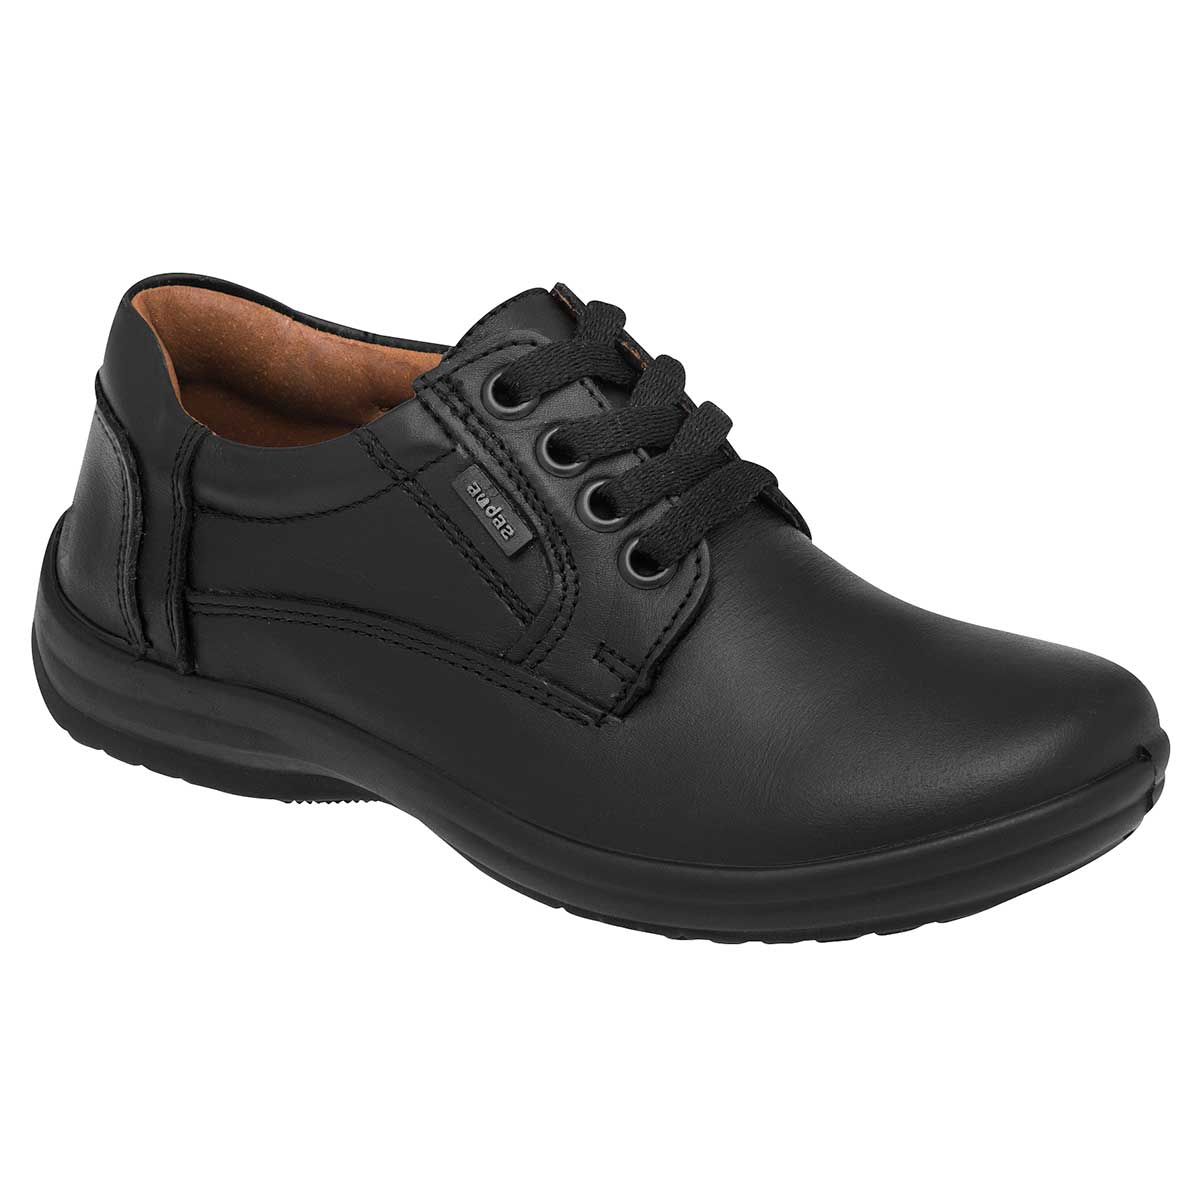 Pakar.com - Mayo: Regalos para mamá | Zapato casual para niño cod-70267